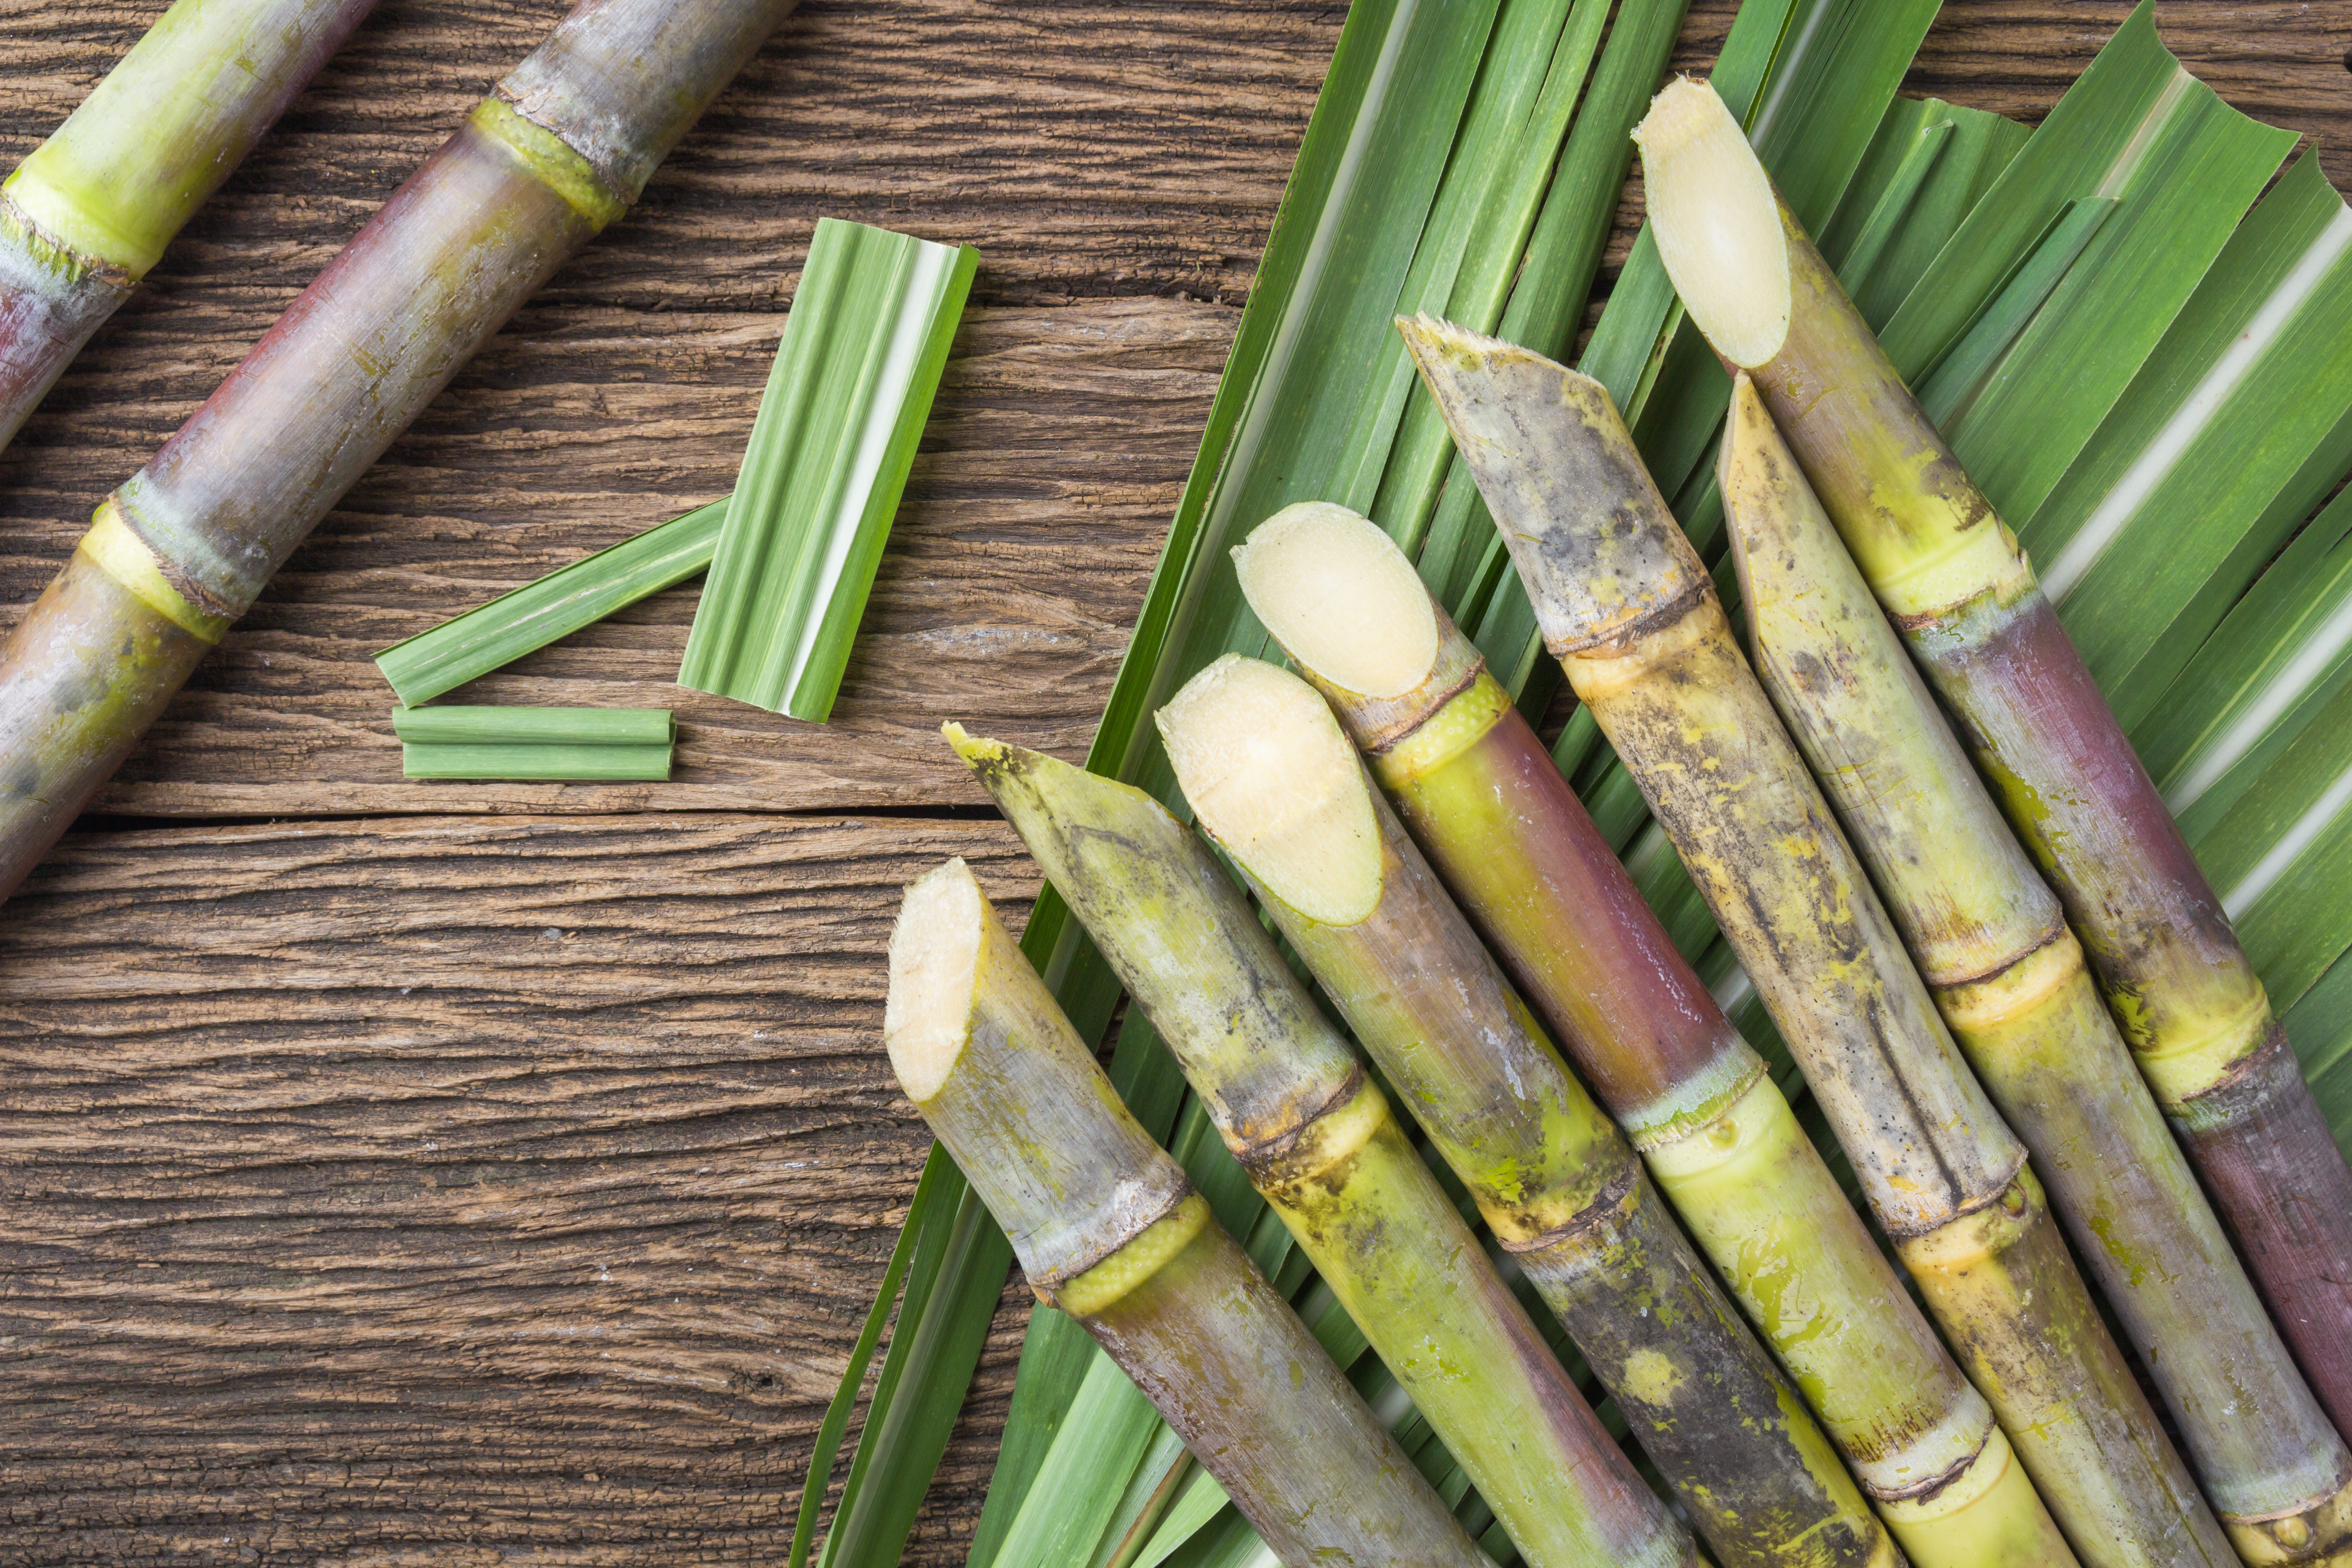 Sugarcane benefits